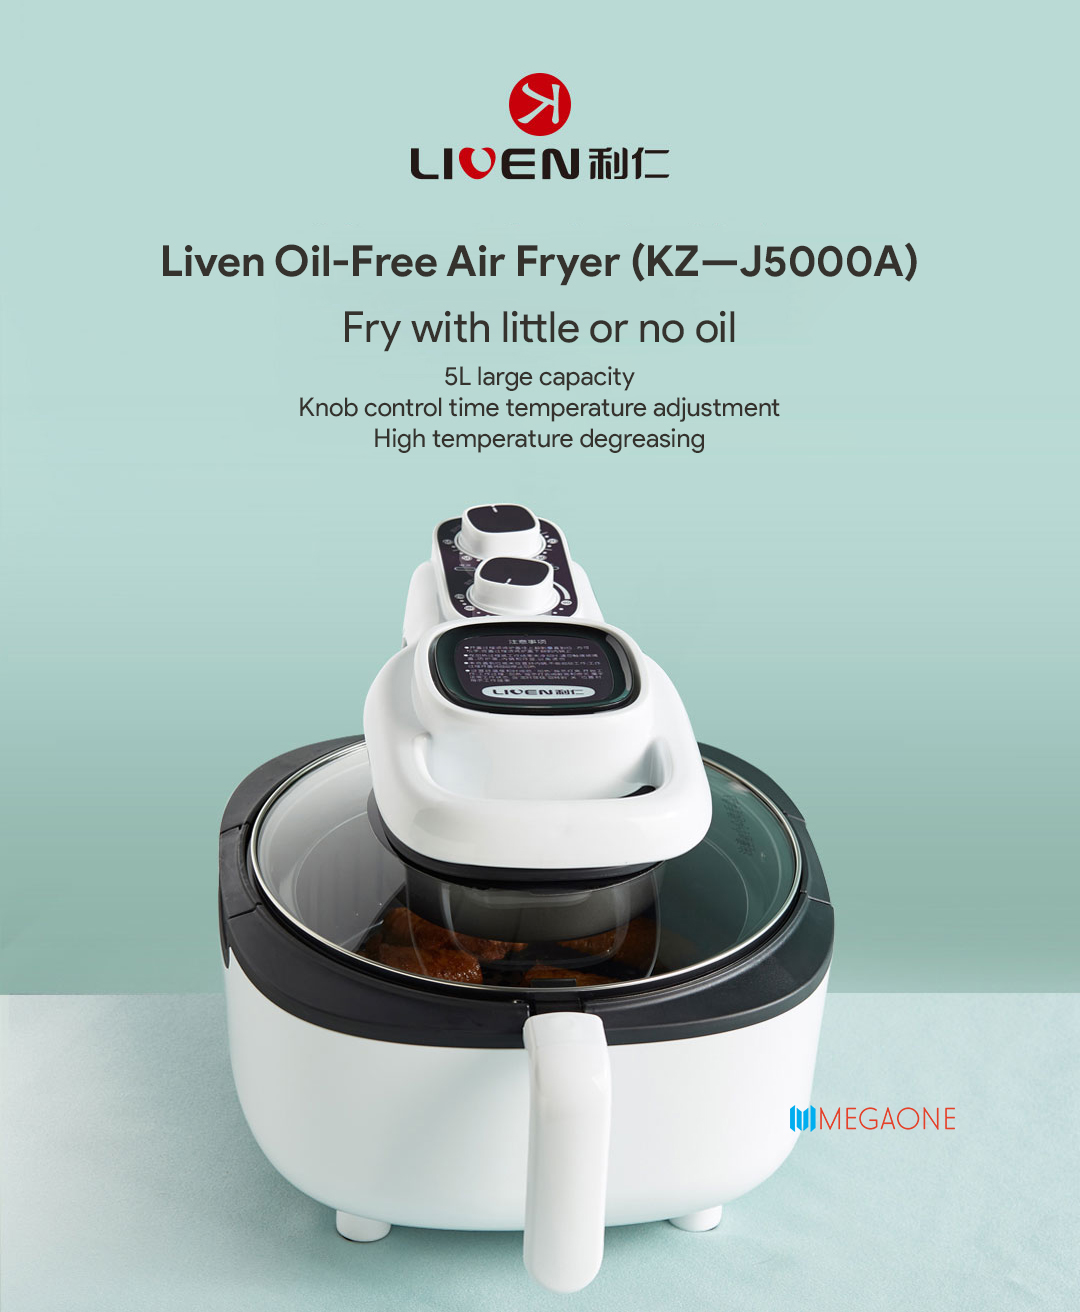 Liven Oil-Free Air Fryer (KZ—J5000A)